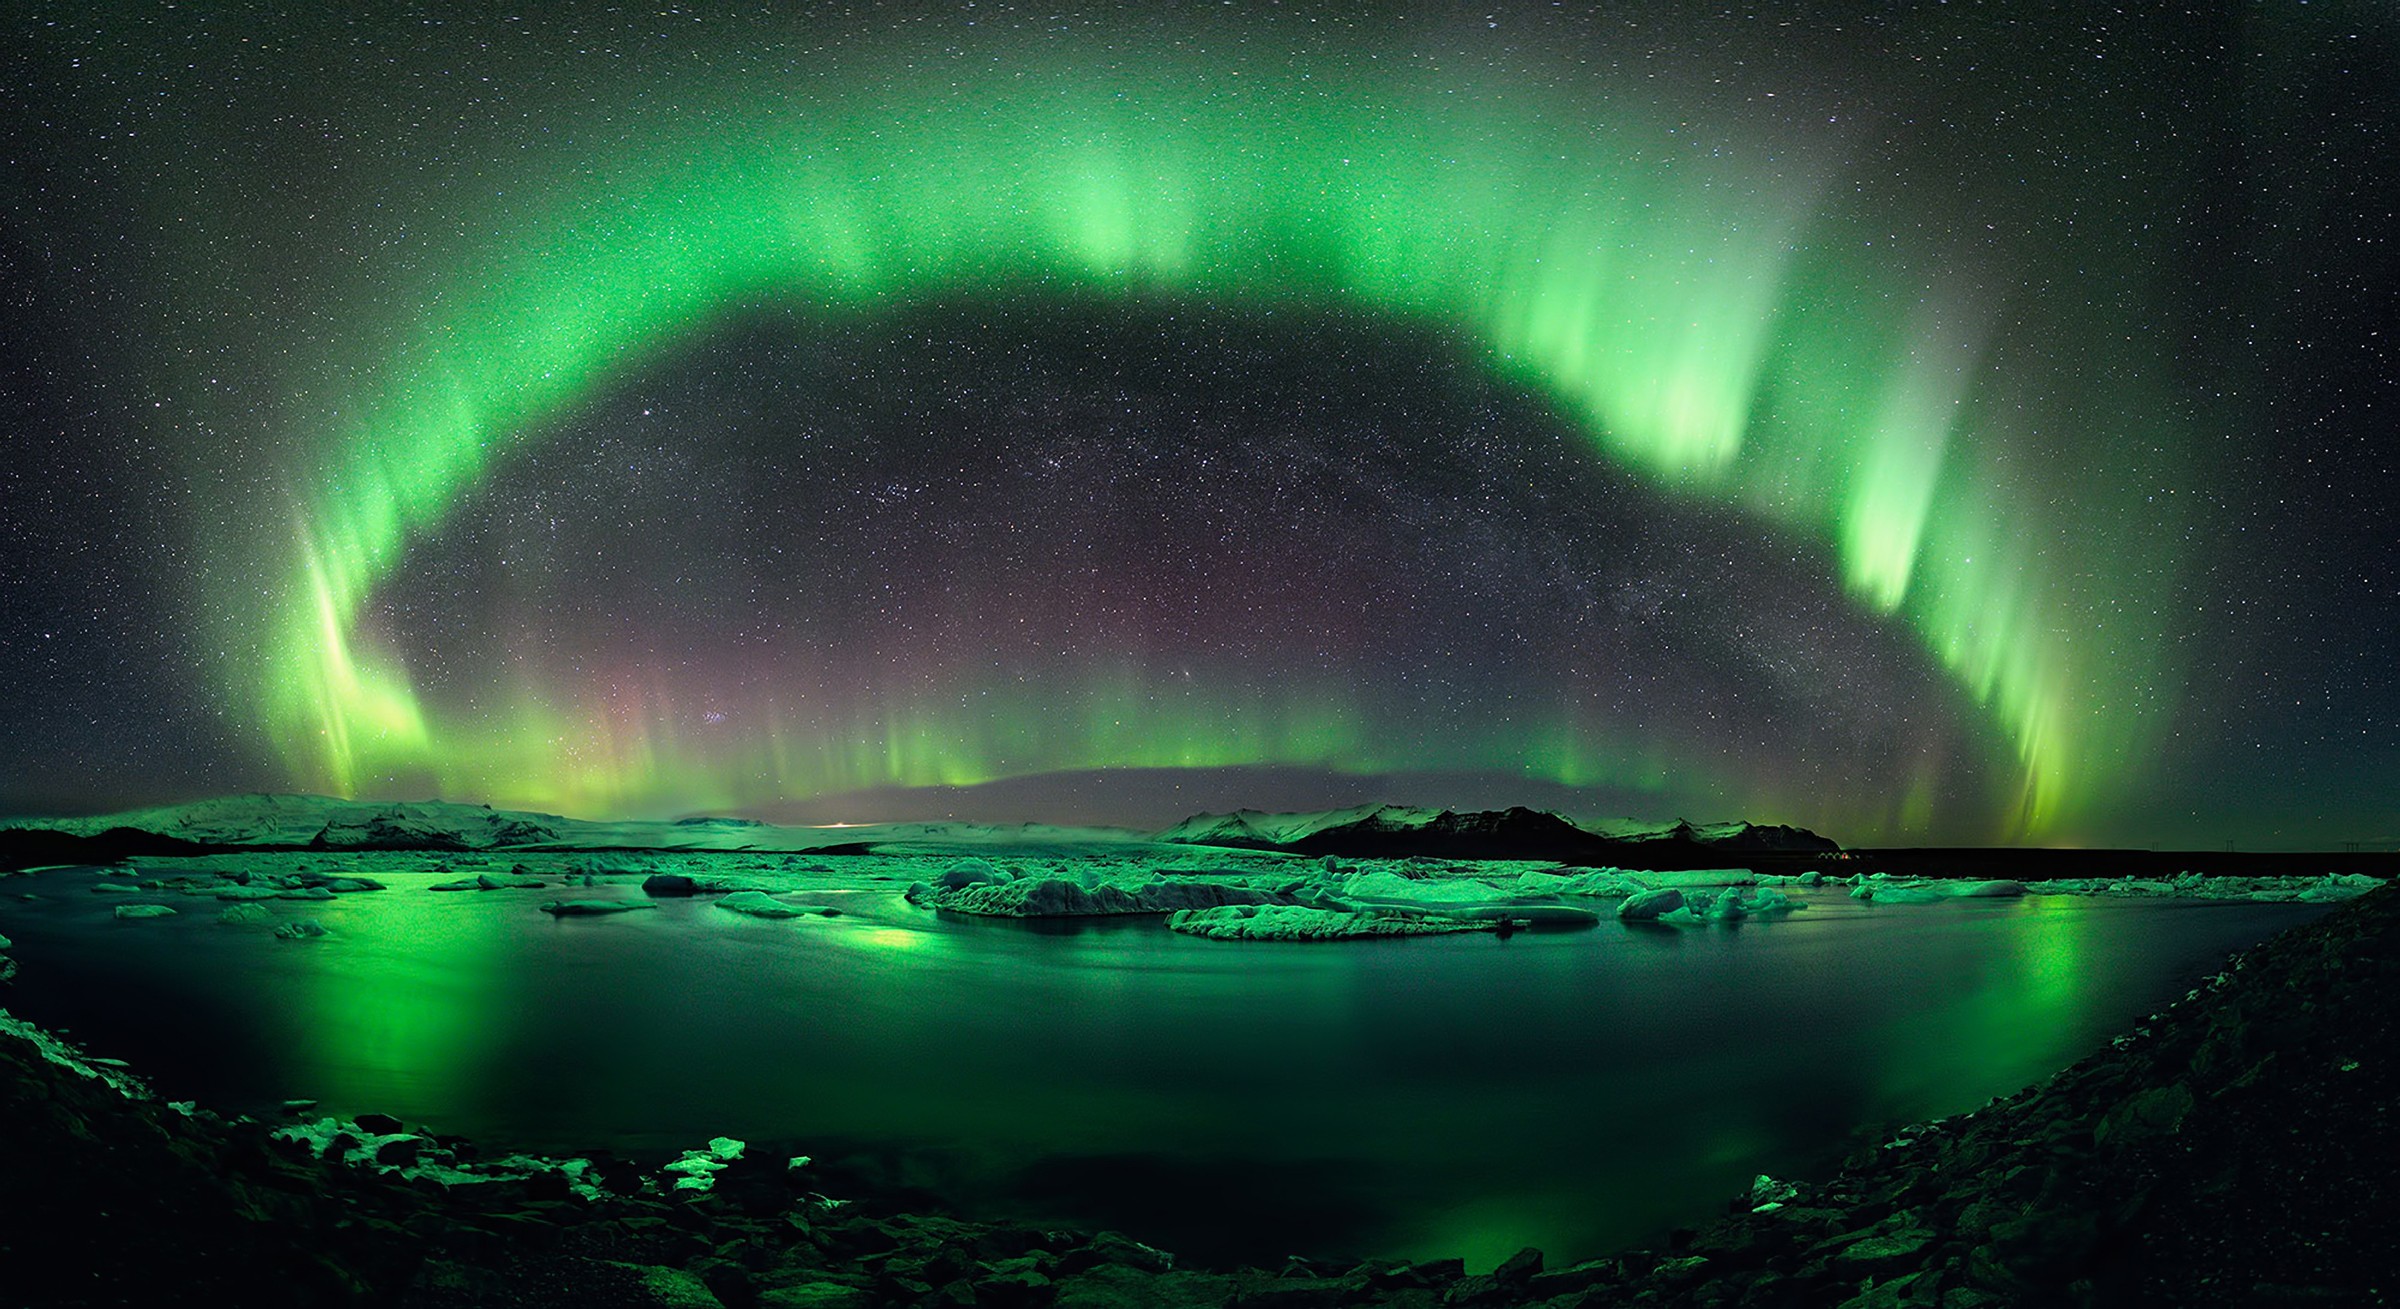 General 2400x1309 nature lake aurorae digital art landscape Iceland sky stars night Jokulsarlon